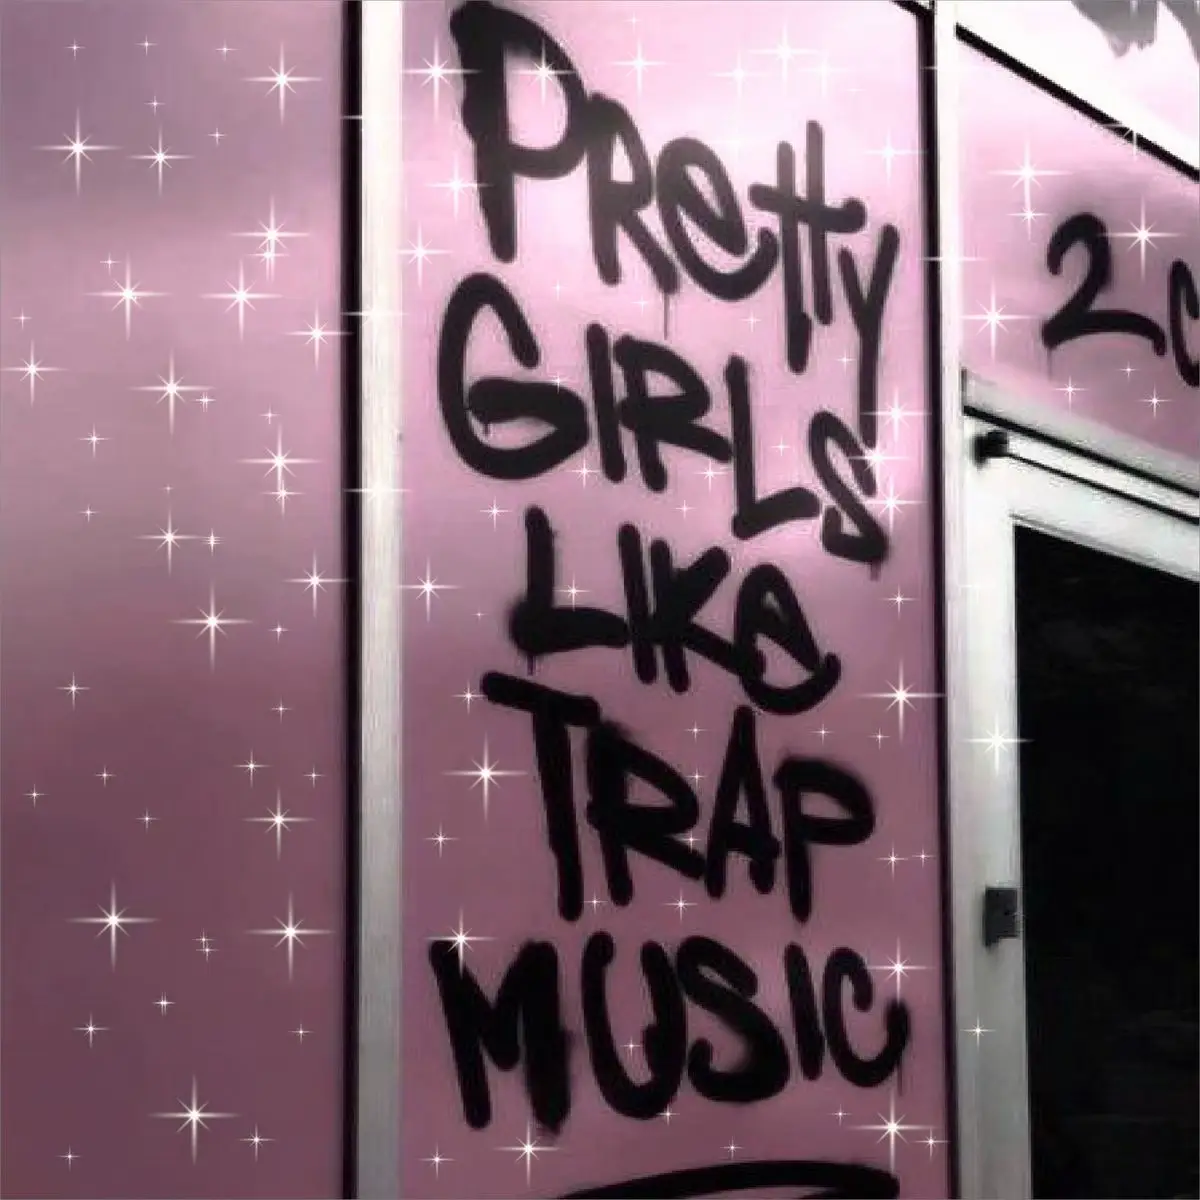  A grafiti on a wall that says "pretty girls like music".